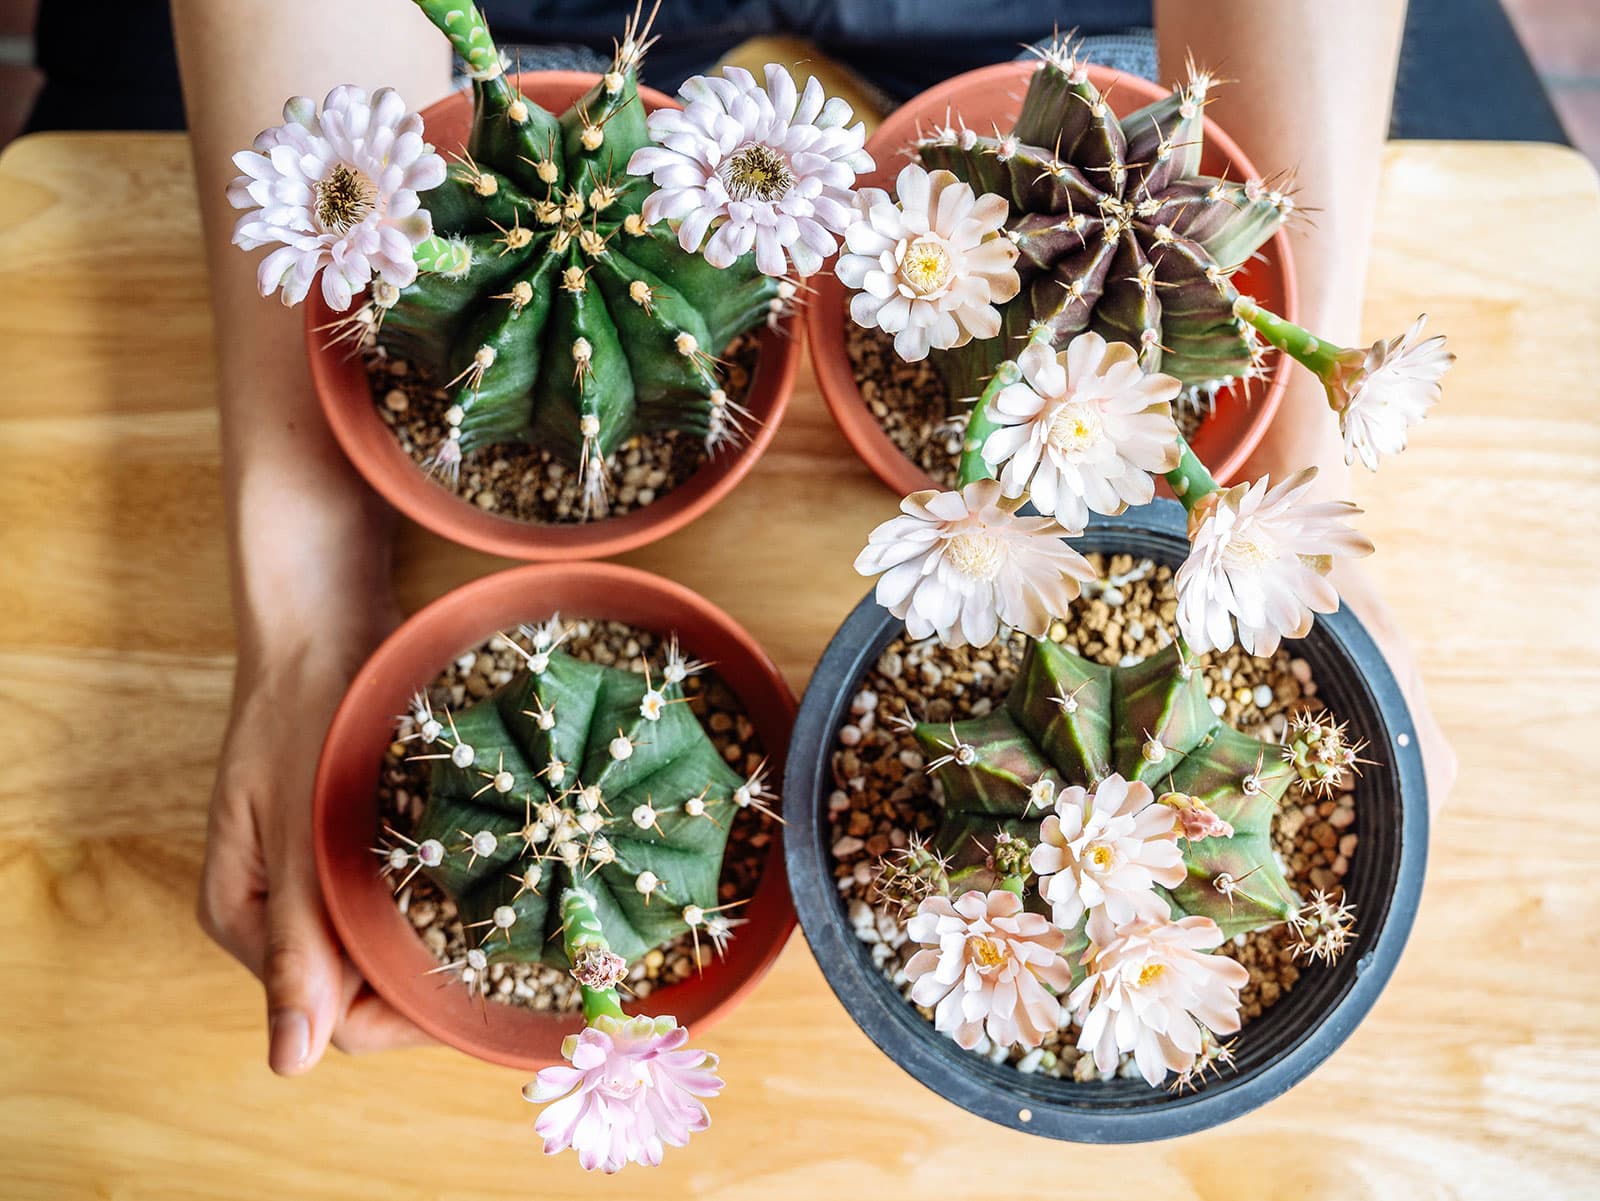 Cactus varieties with amazing flowers: blooming houseplants you'll love